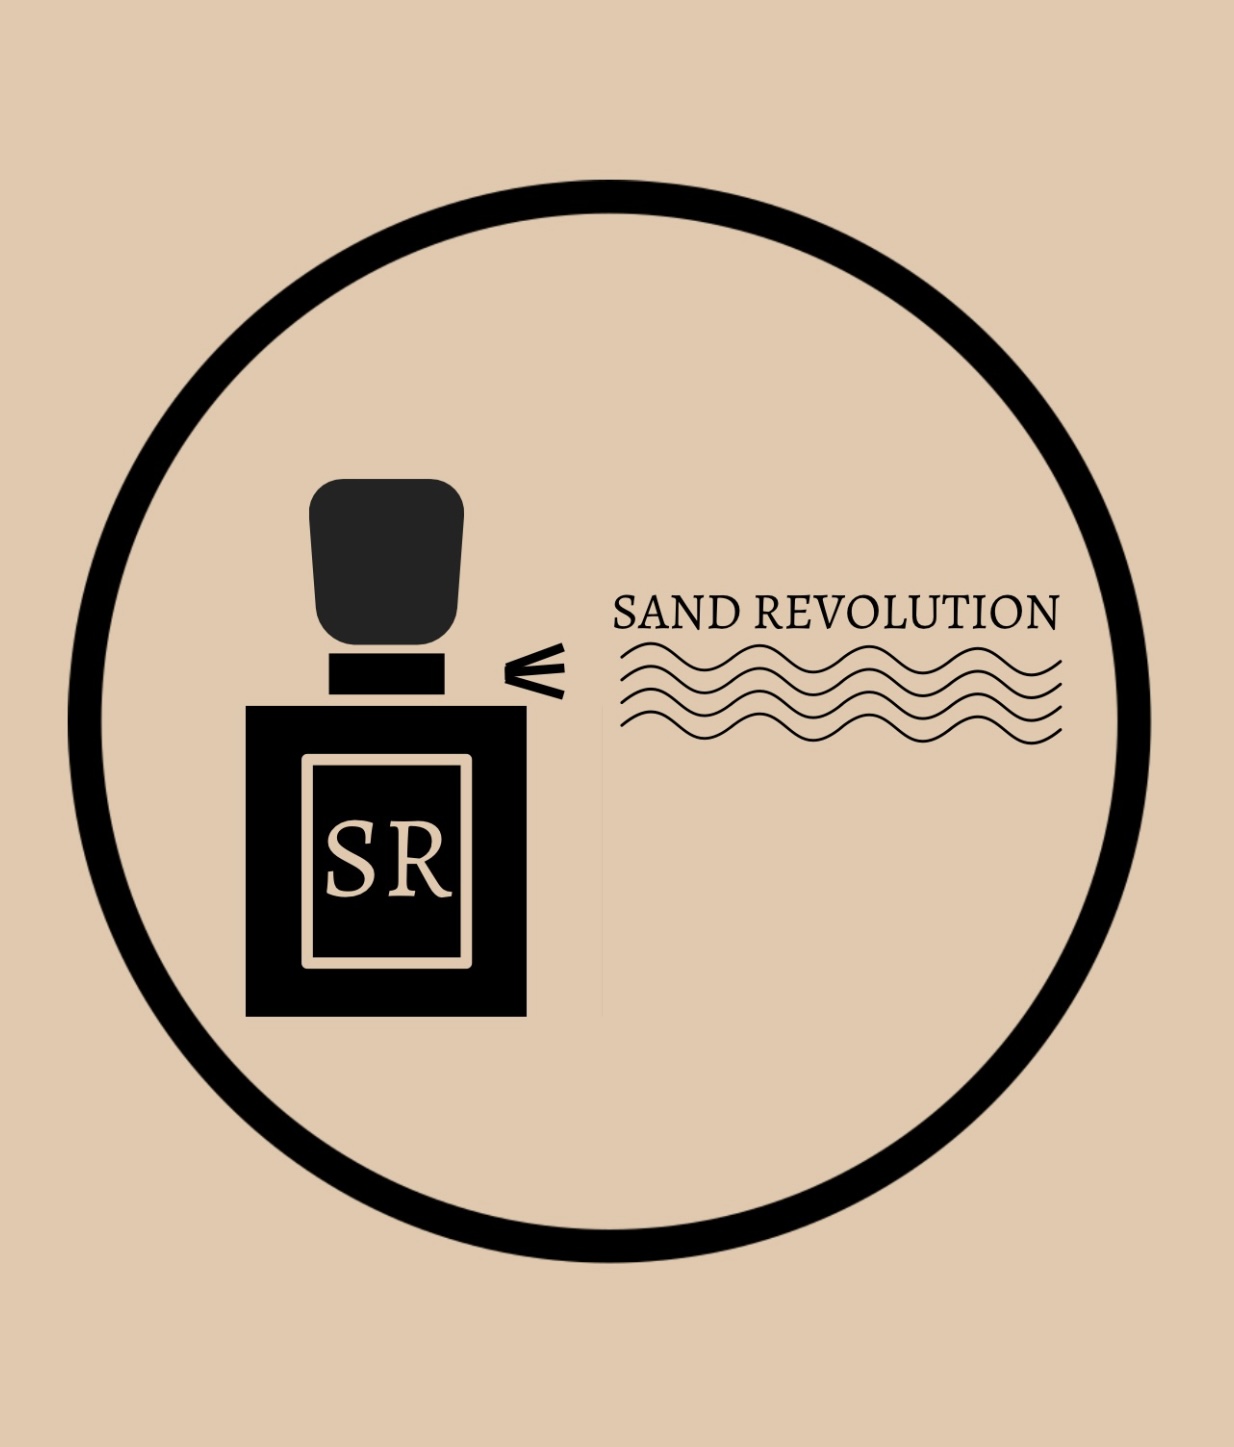 SAND REVOLUTION